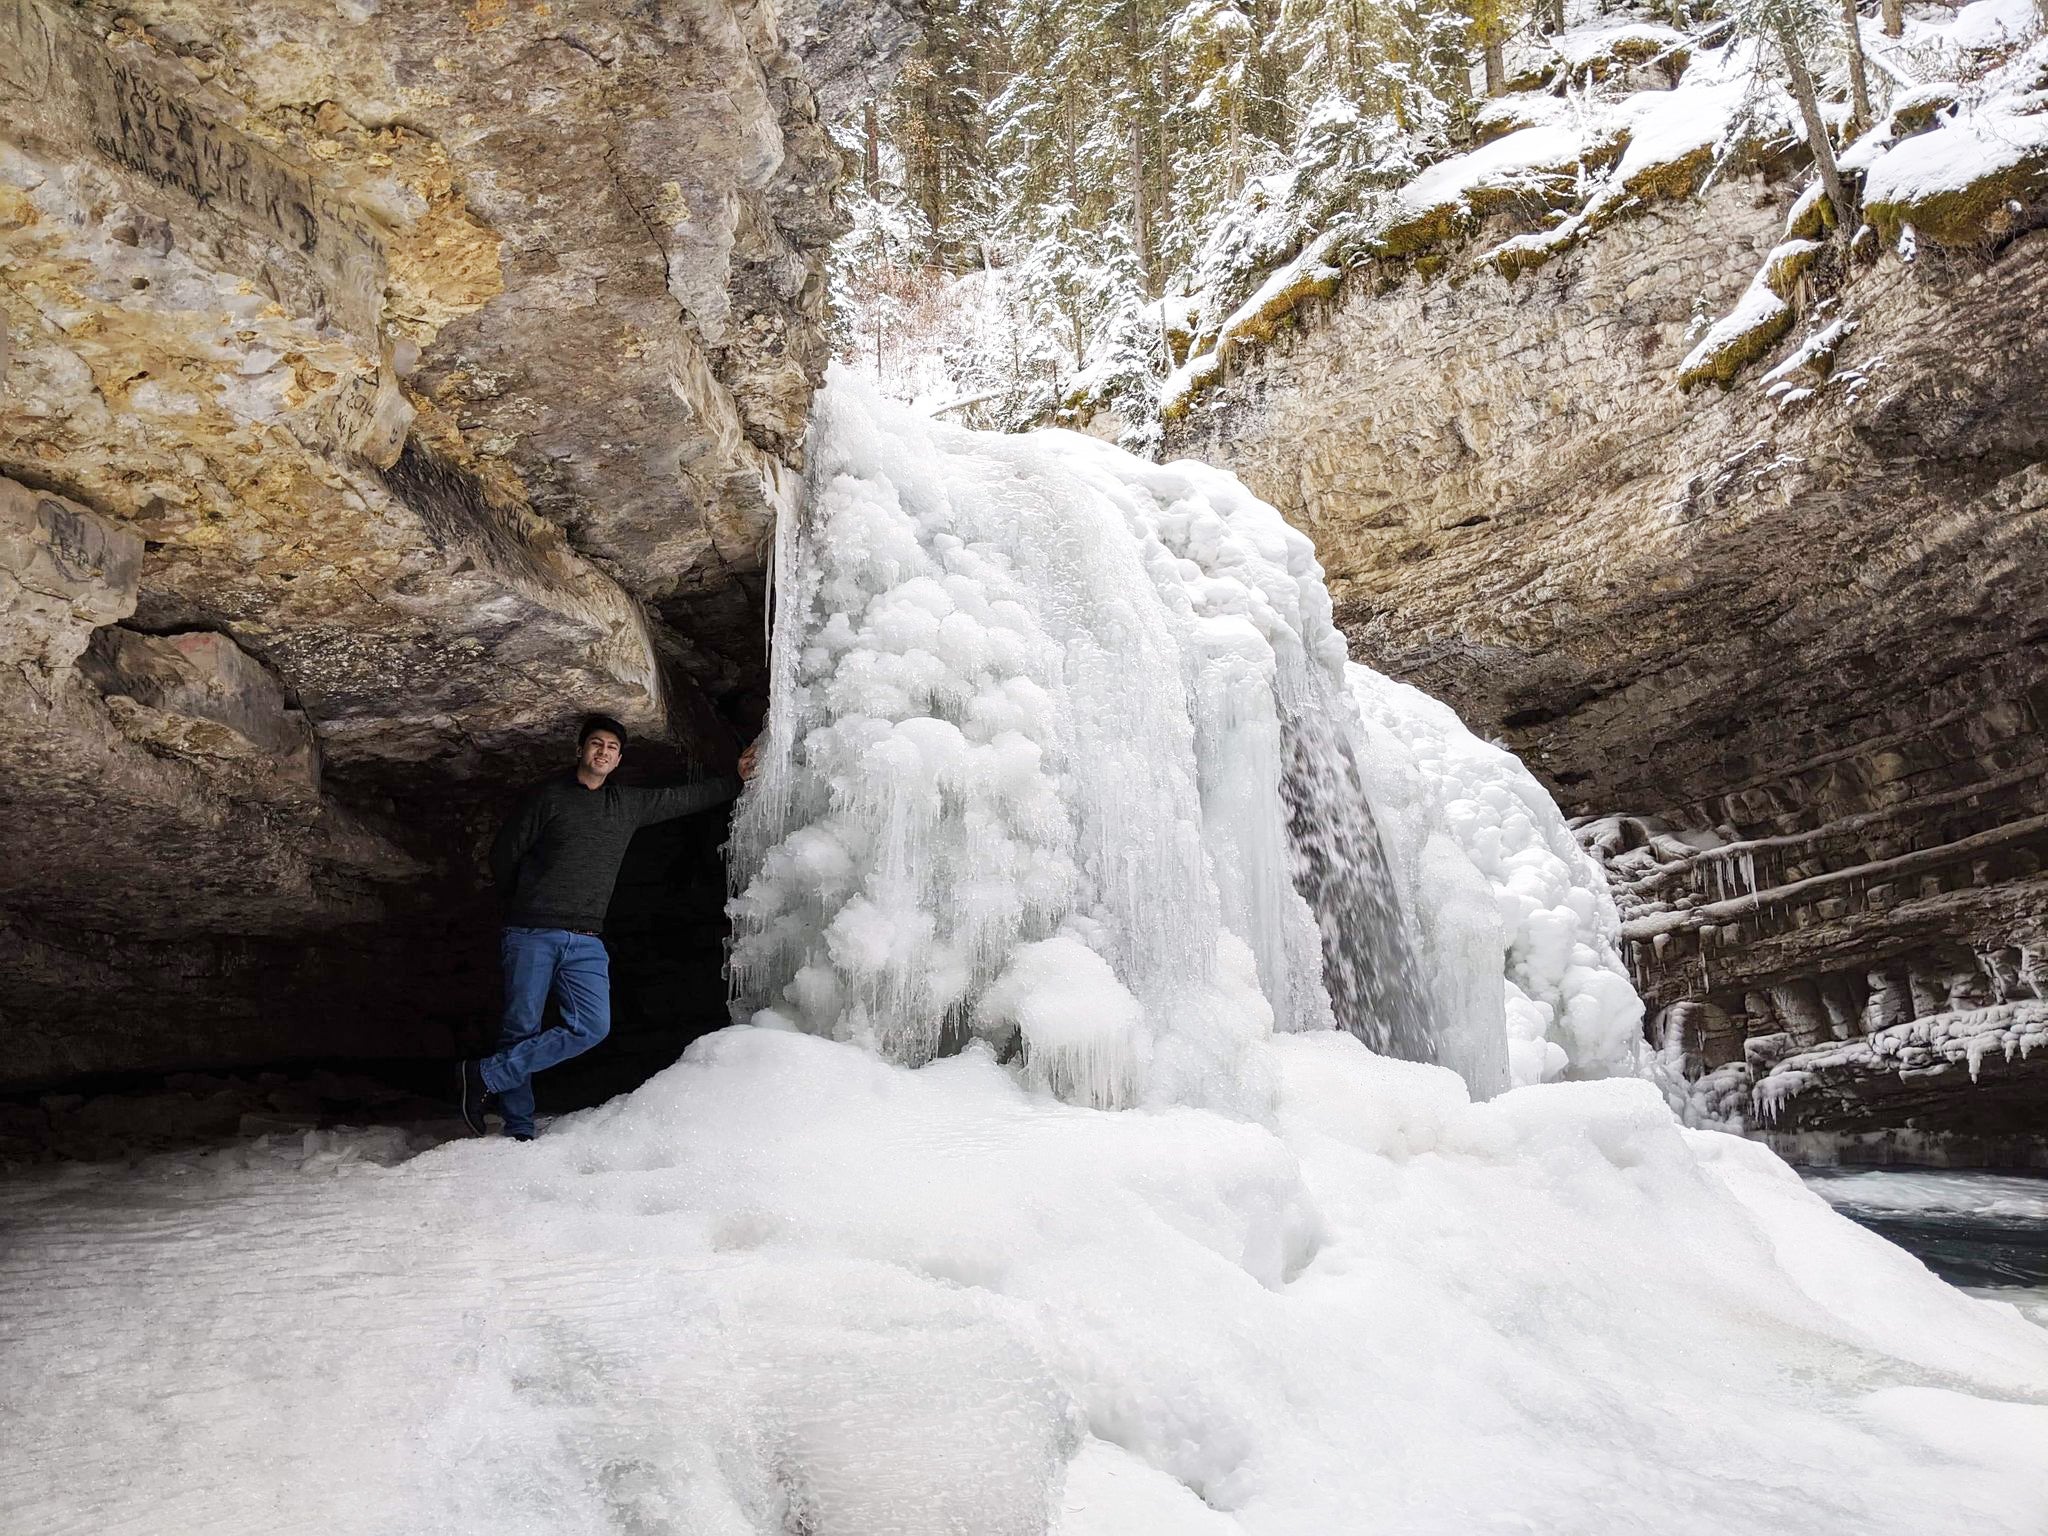 Shan standing beside frozen waterfall